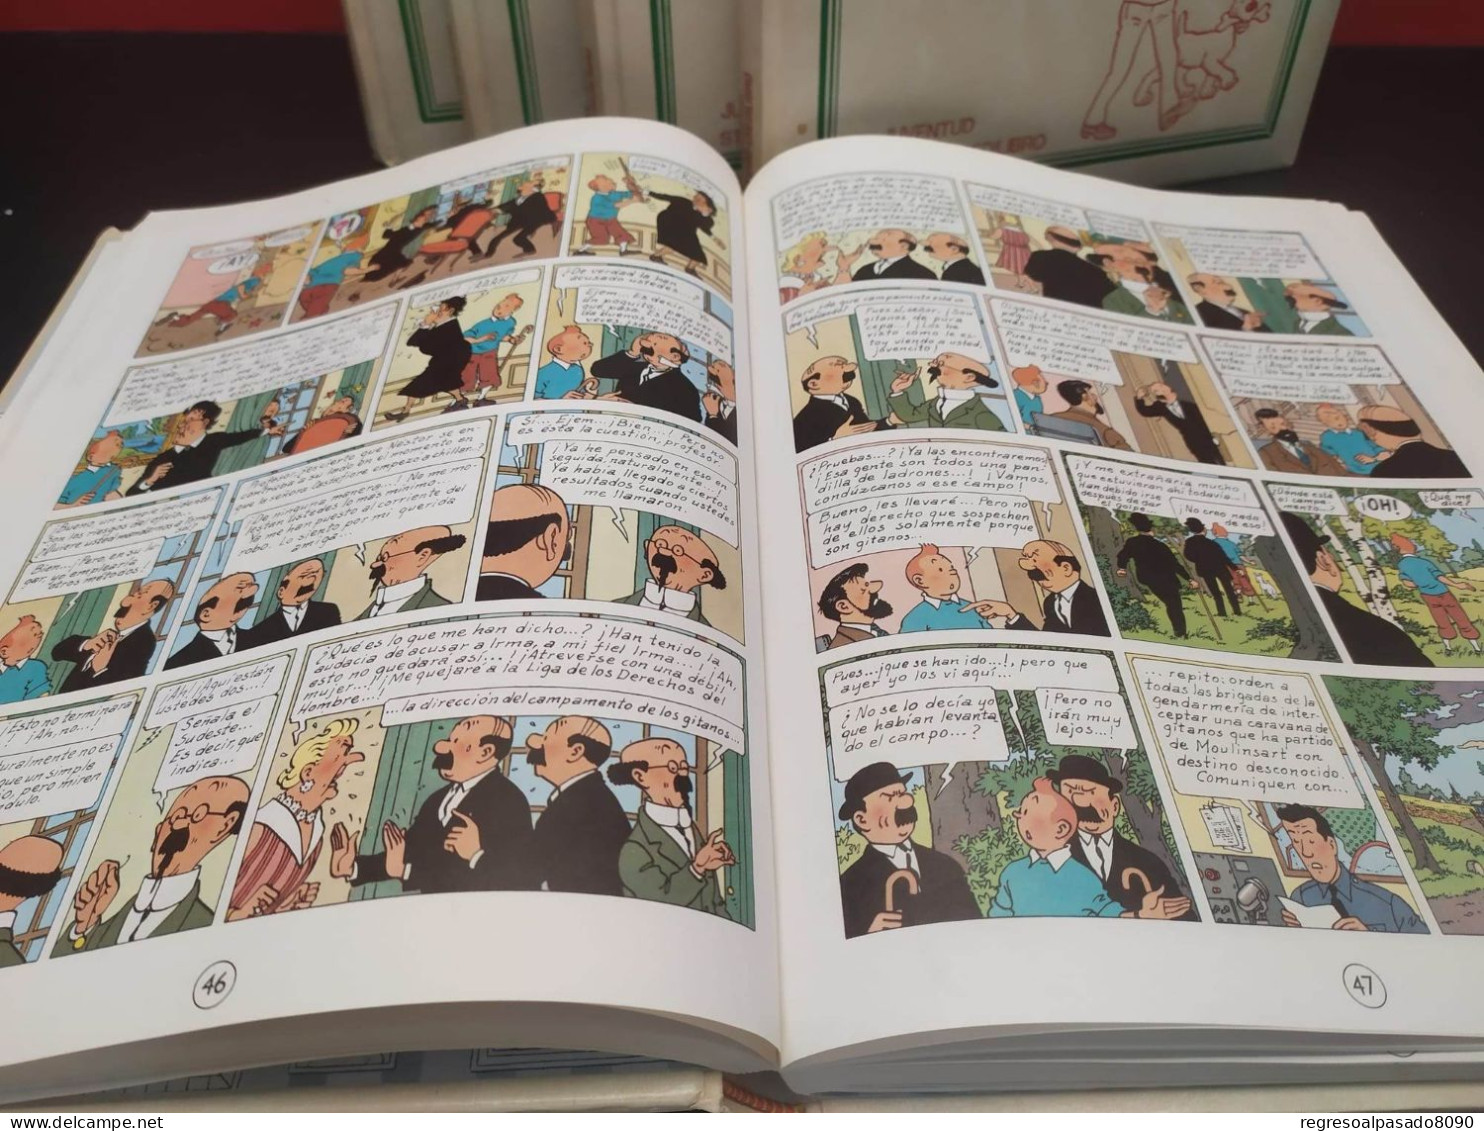 coleccion completa 5 tomos libros comics tintin studio credilibro herge tapas en guaflex 1987